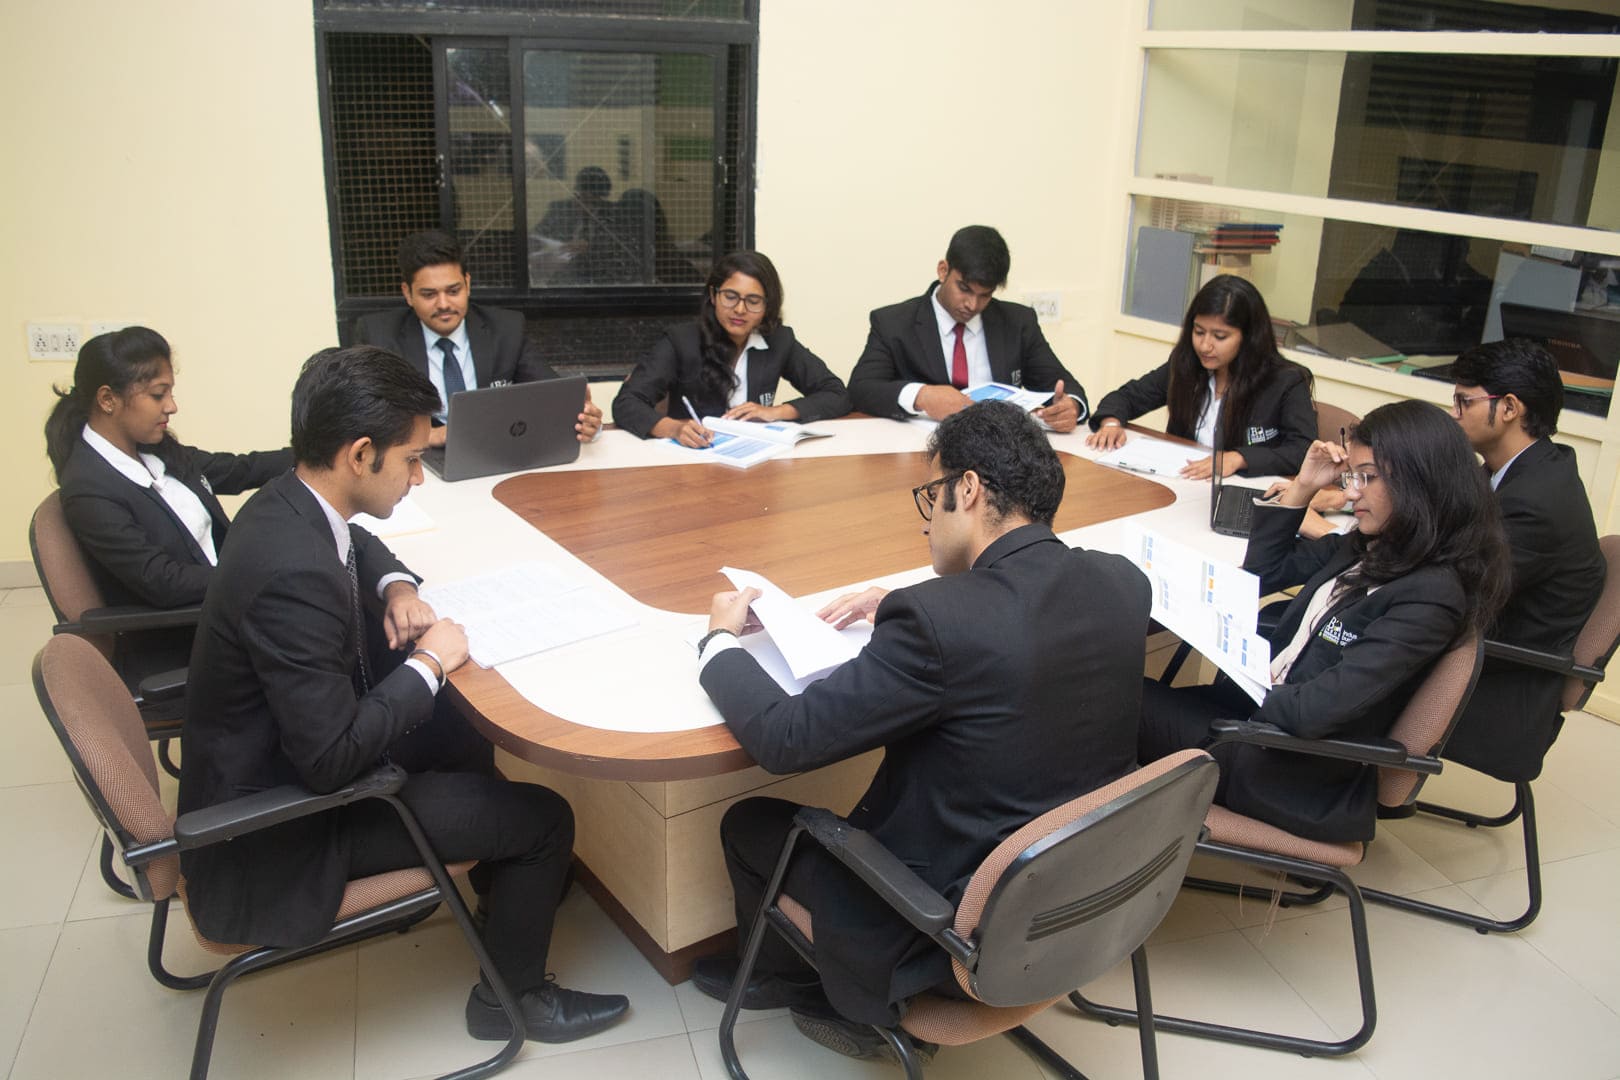 Indus Business Academy Infrastructure & Facilities